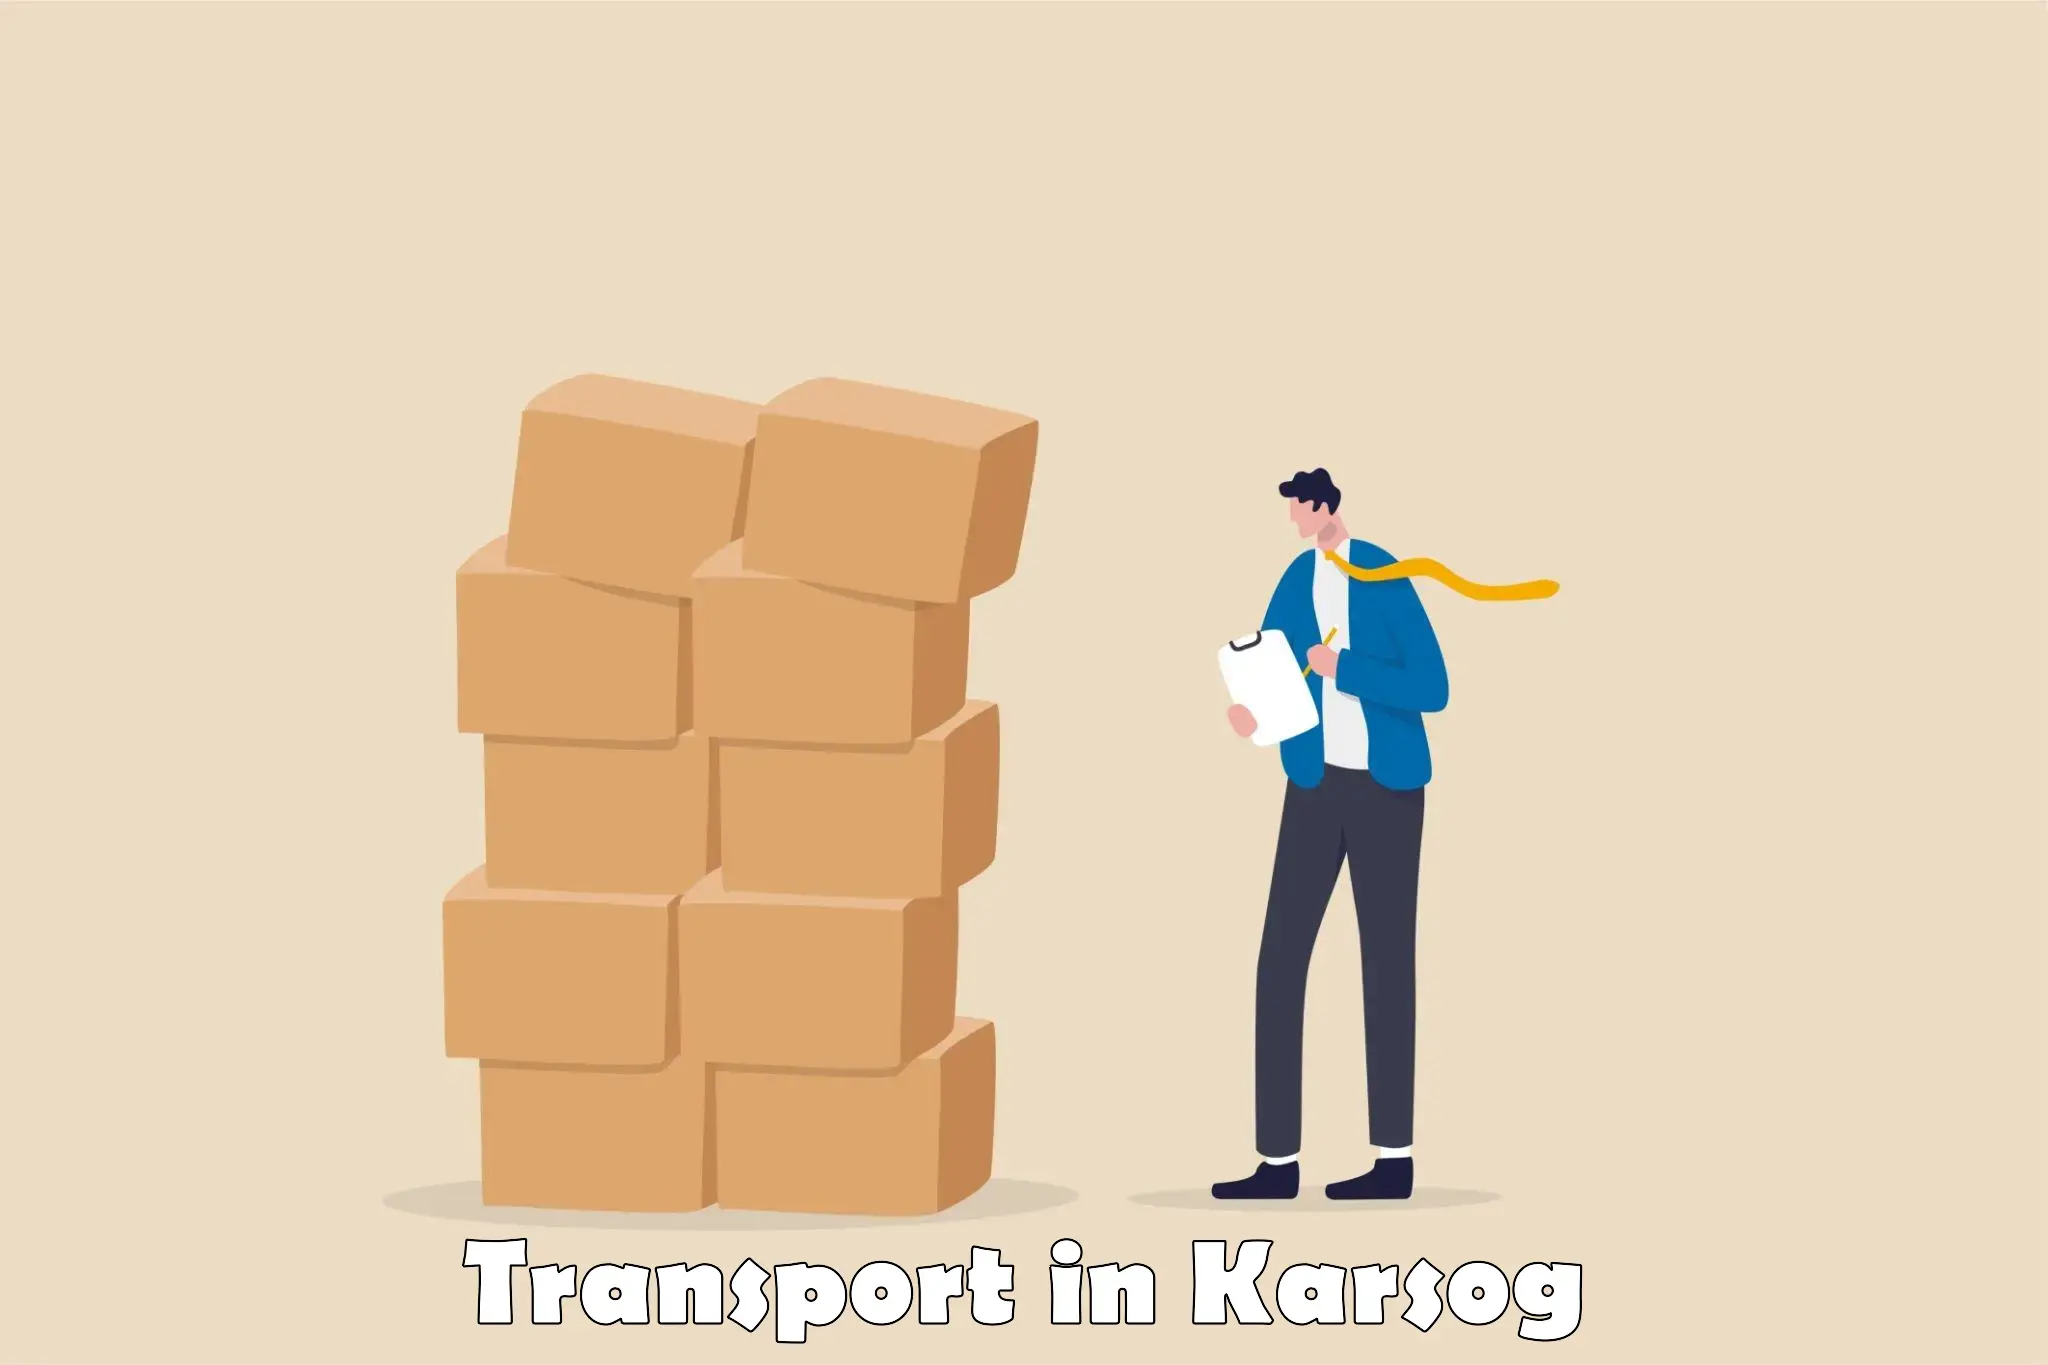 Nearby transport service in Karsog